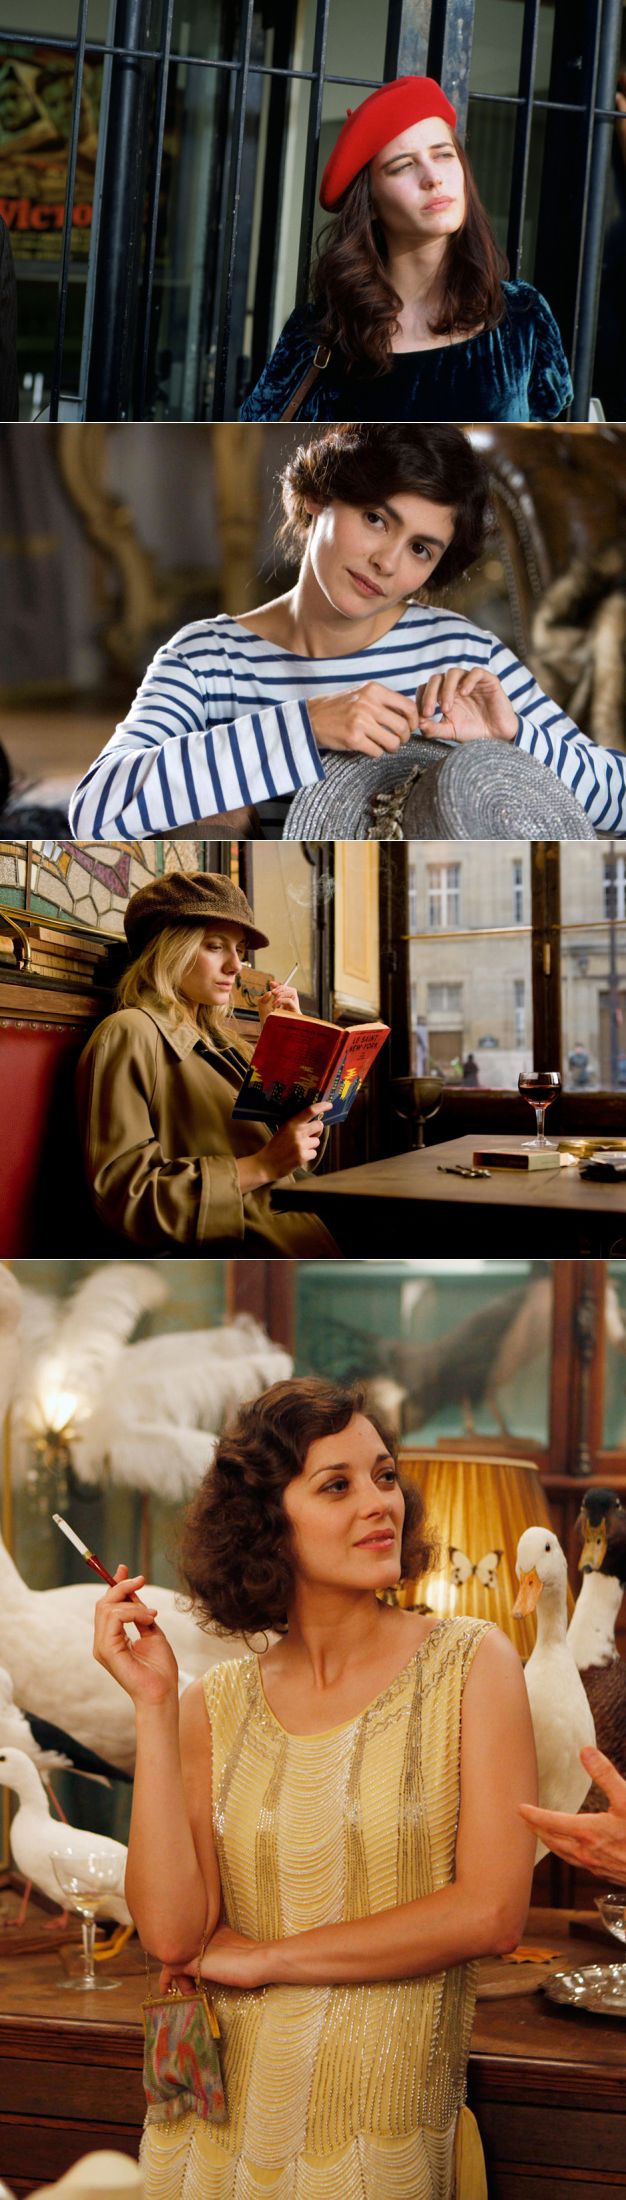 Уроки французского стиля: как одеваются парижанки - Леди Mail.Ru